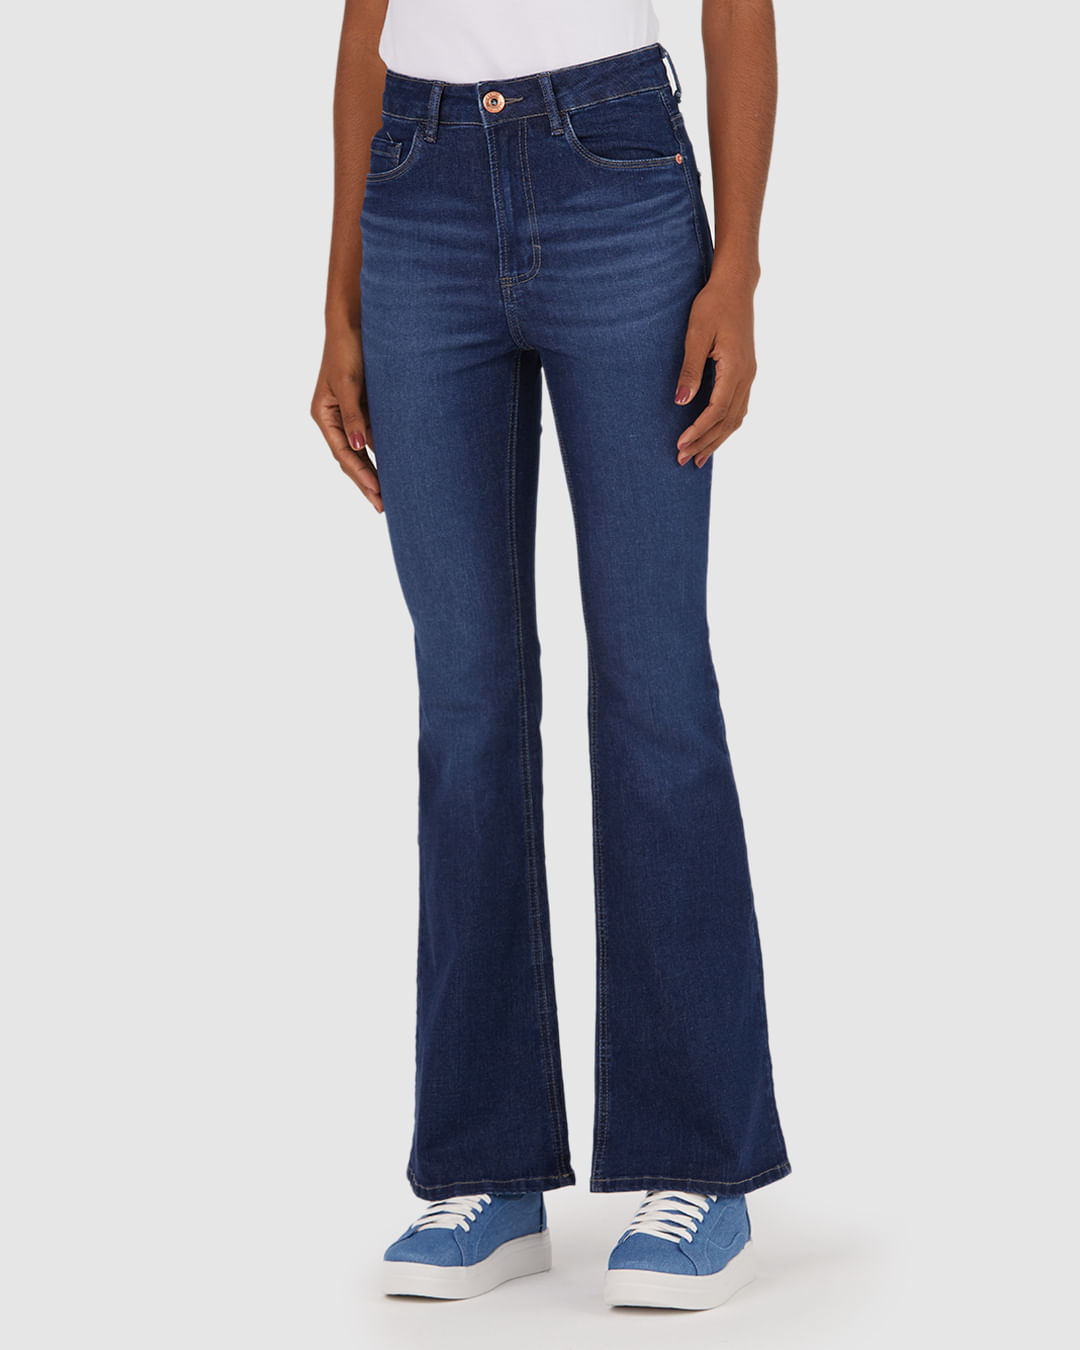 Calça Feminina Small Flare Cintura Alta Jeans Com Elastano Azul Escuro 48 -  Malwee